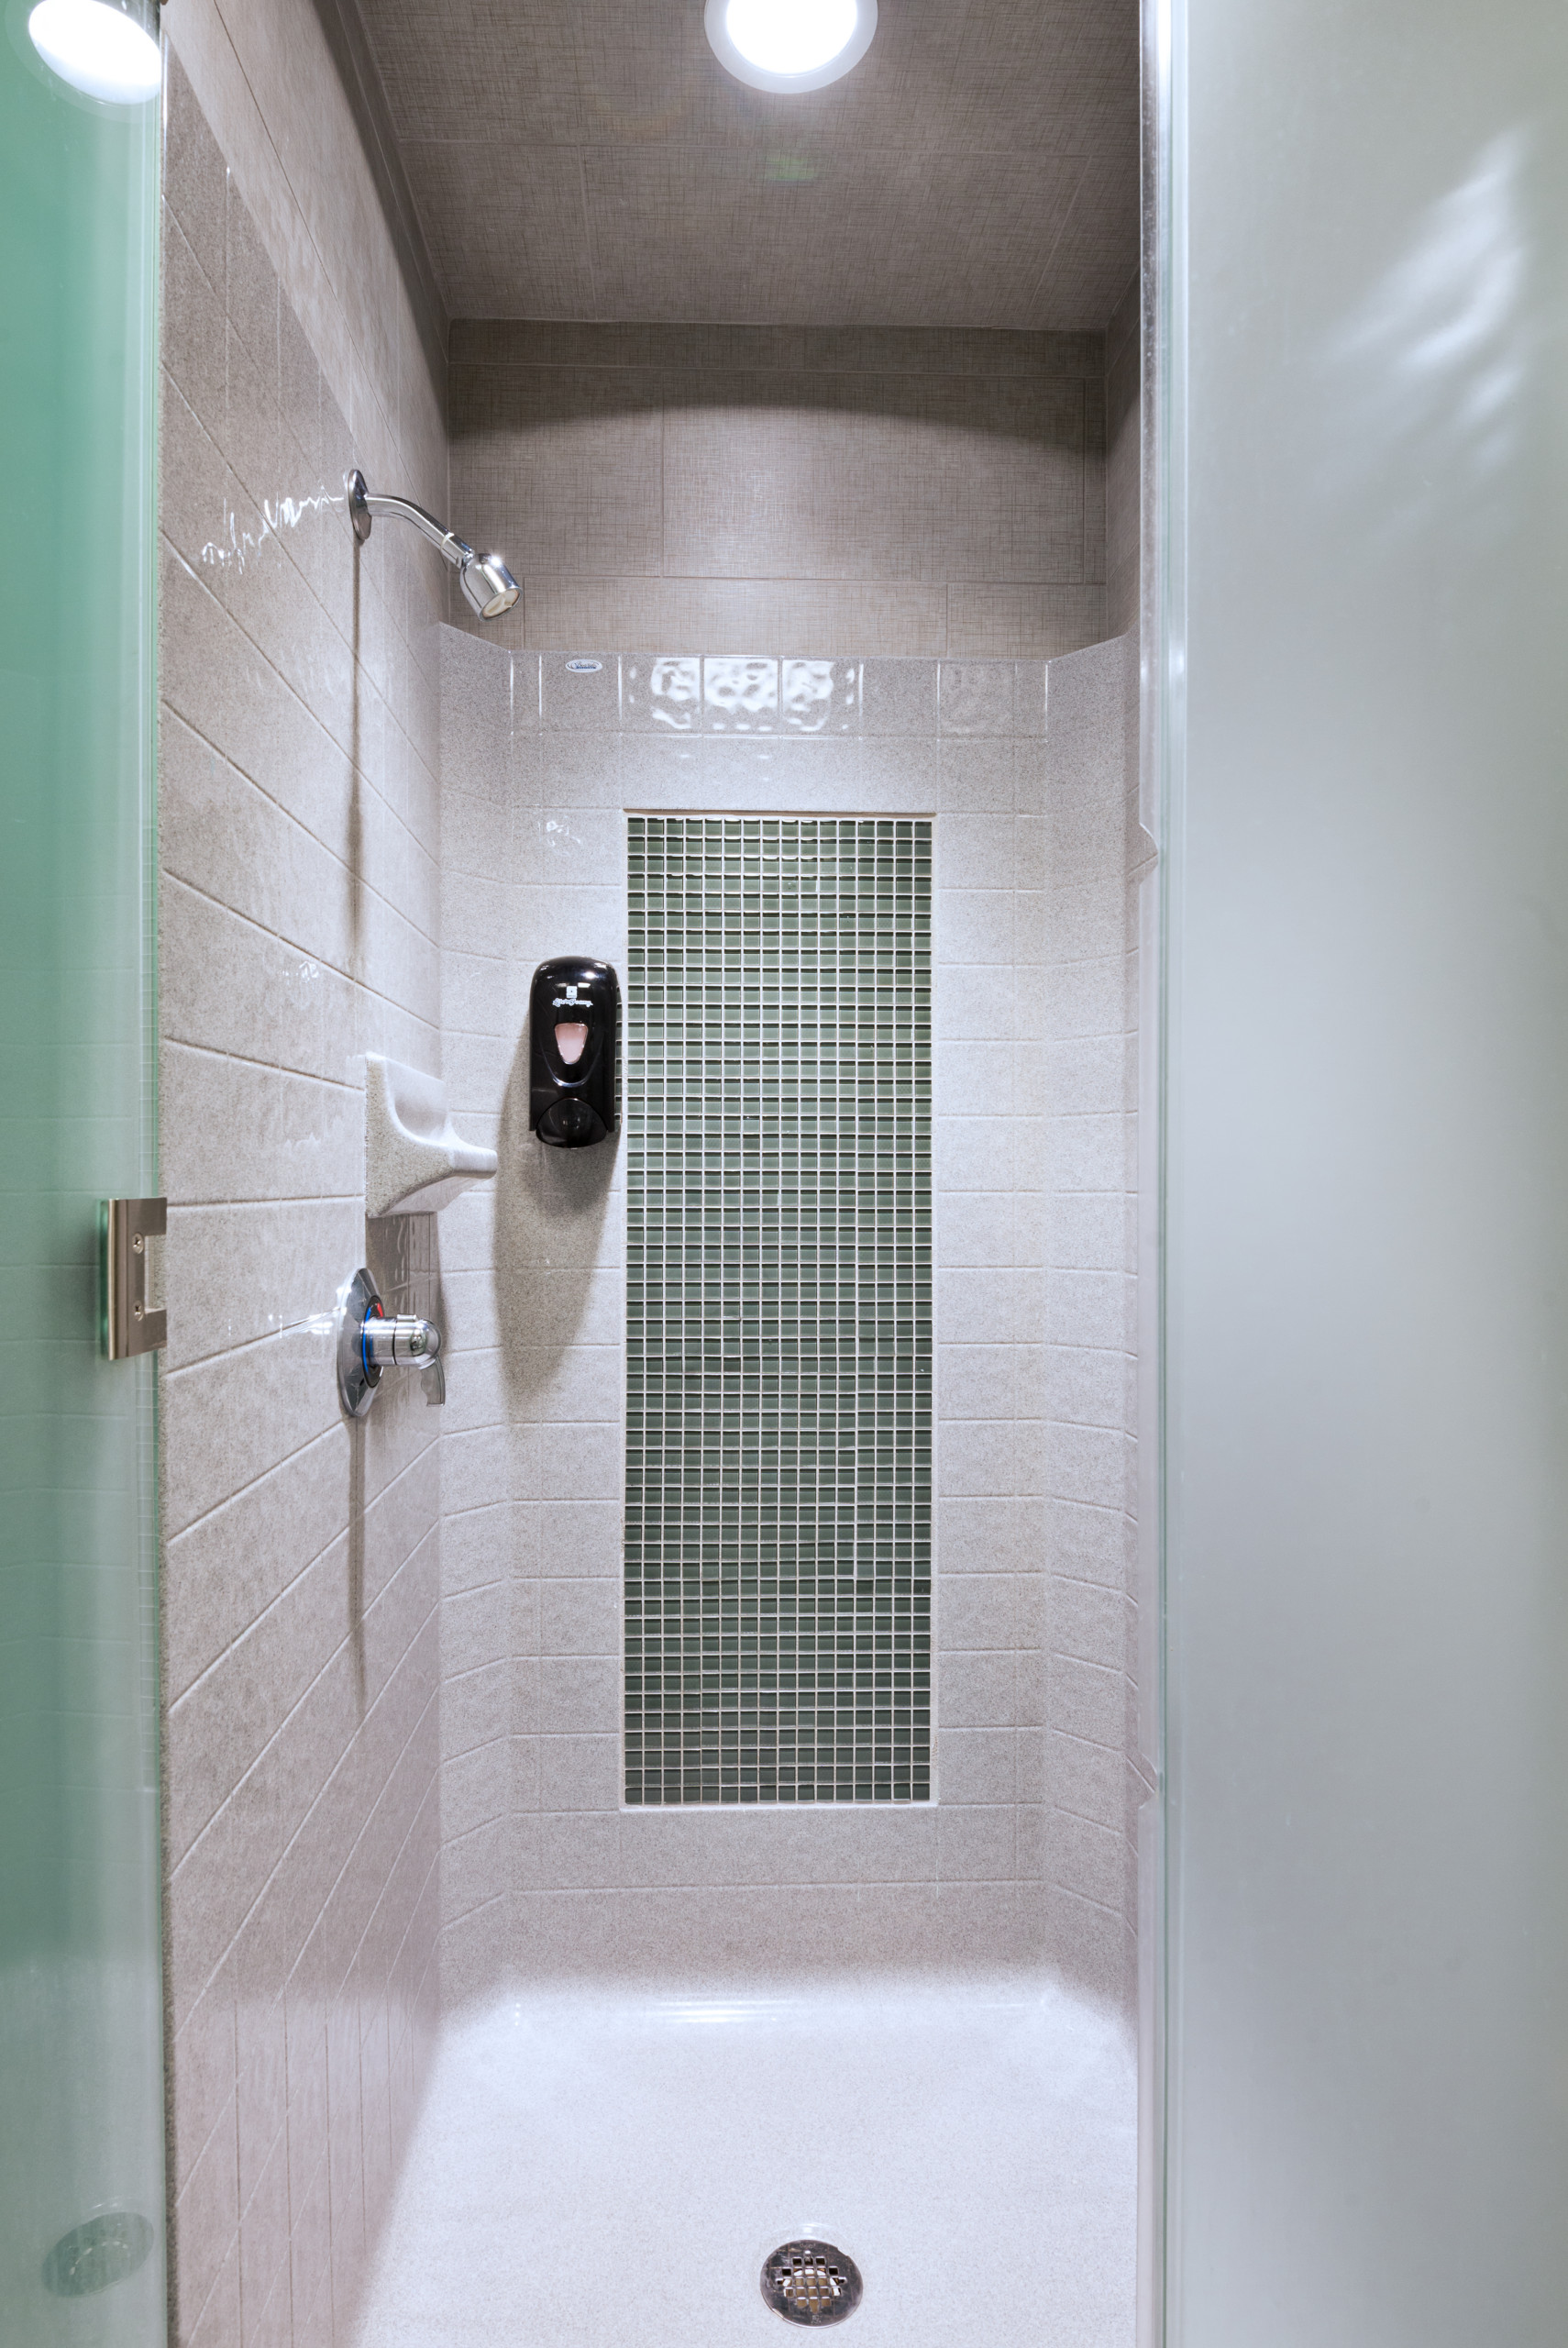 Corner Soap Dish Bathroom Ideas Houzz, Corner Soap Dish For Tiled Shower Wall